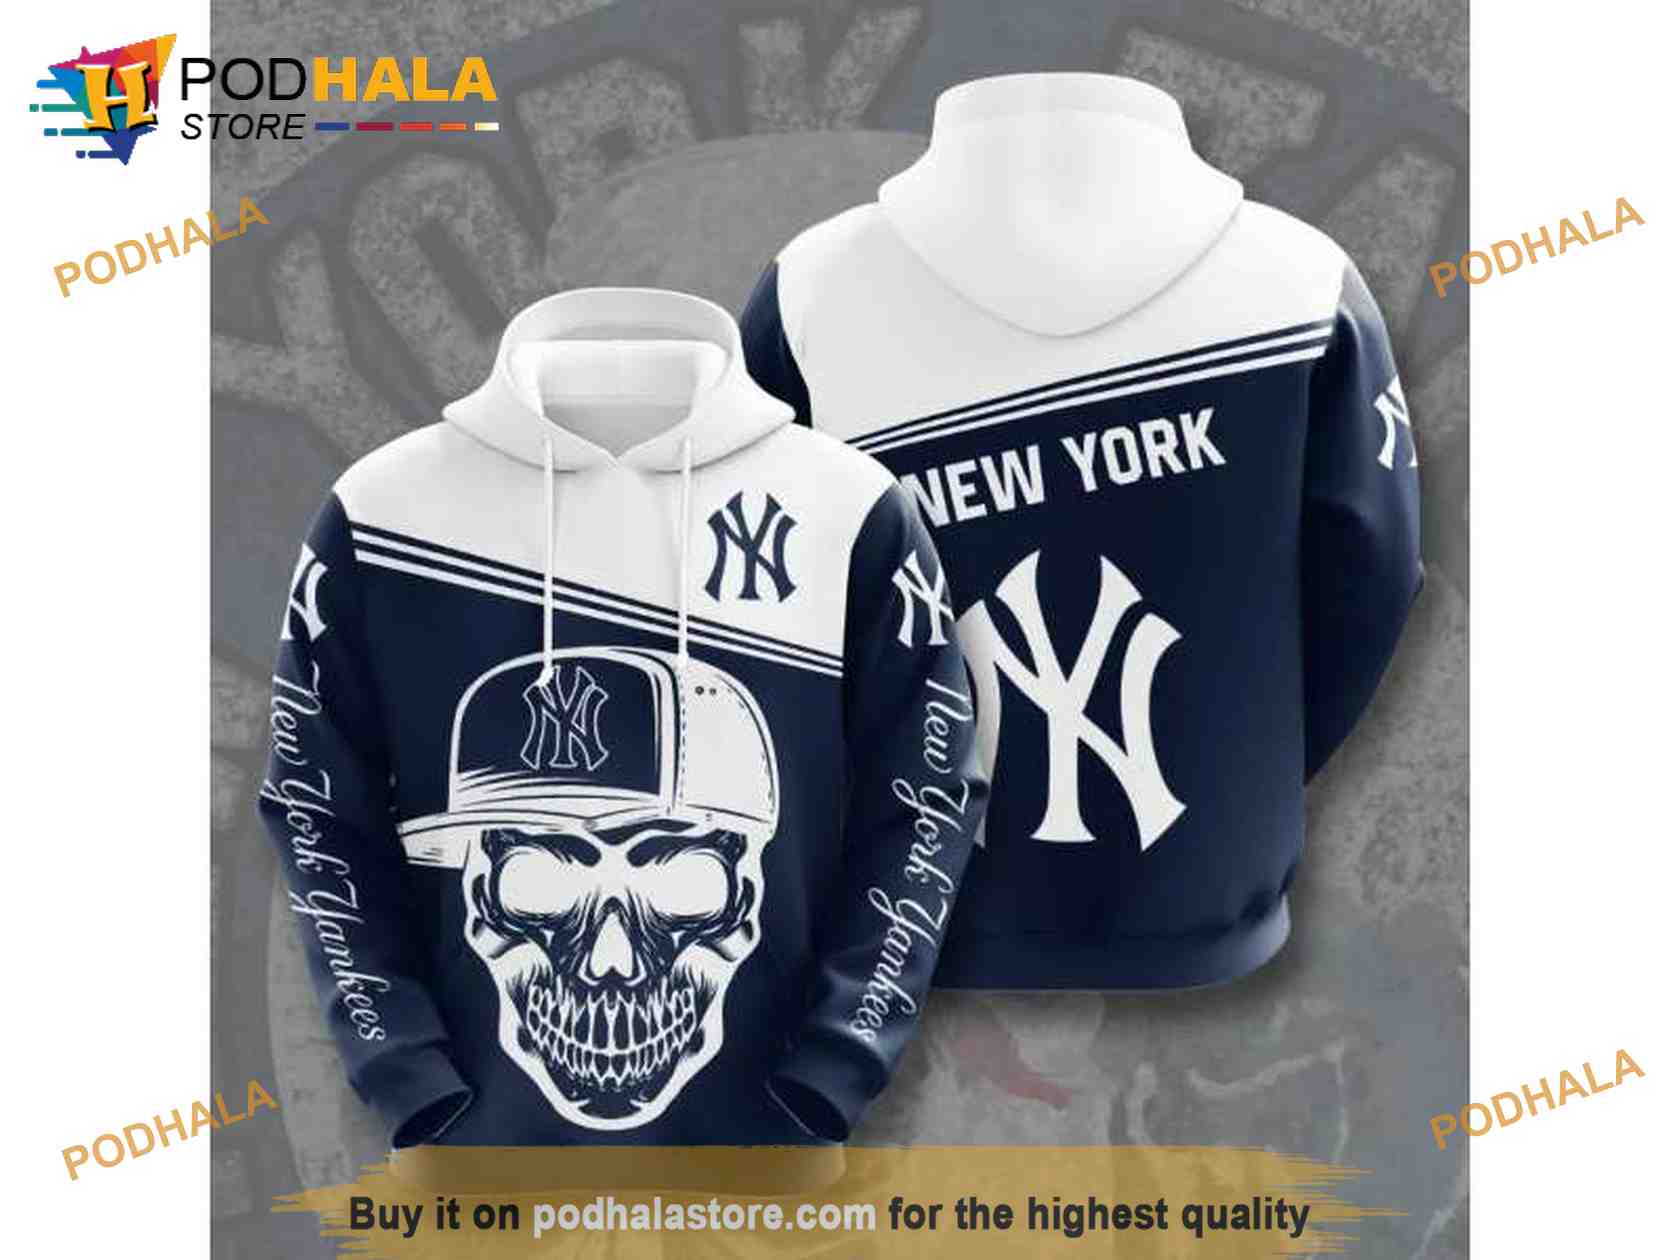 Men's New York Yankees Sweatshirts & Hoodies